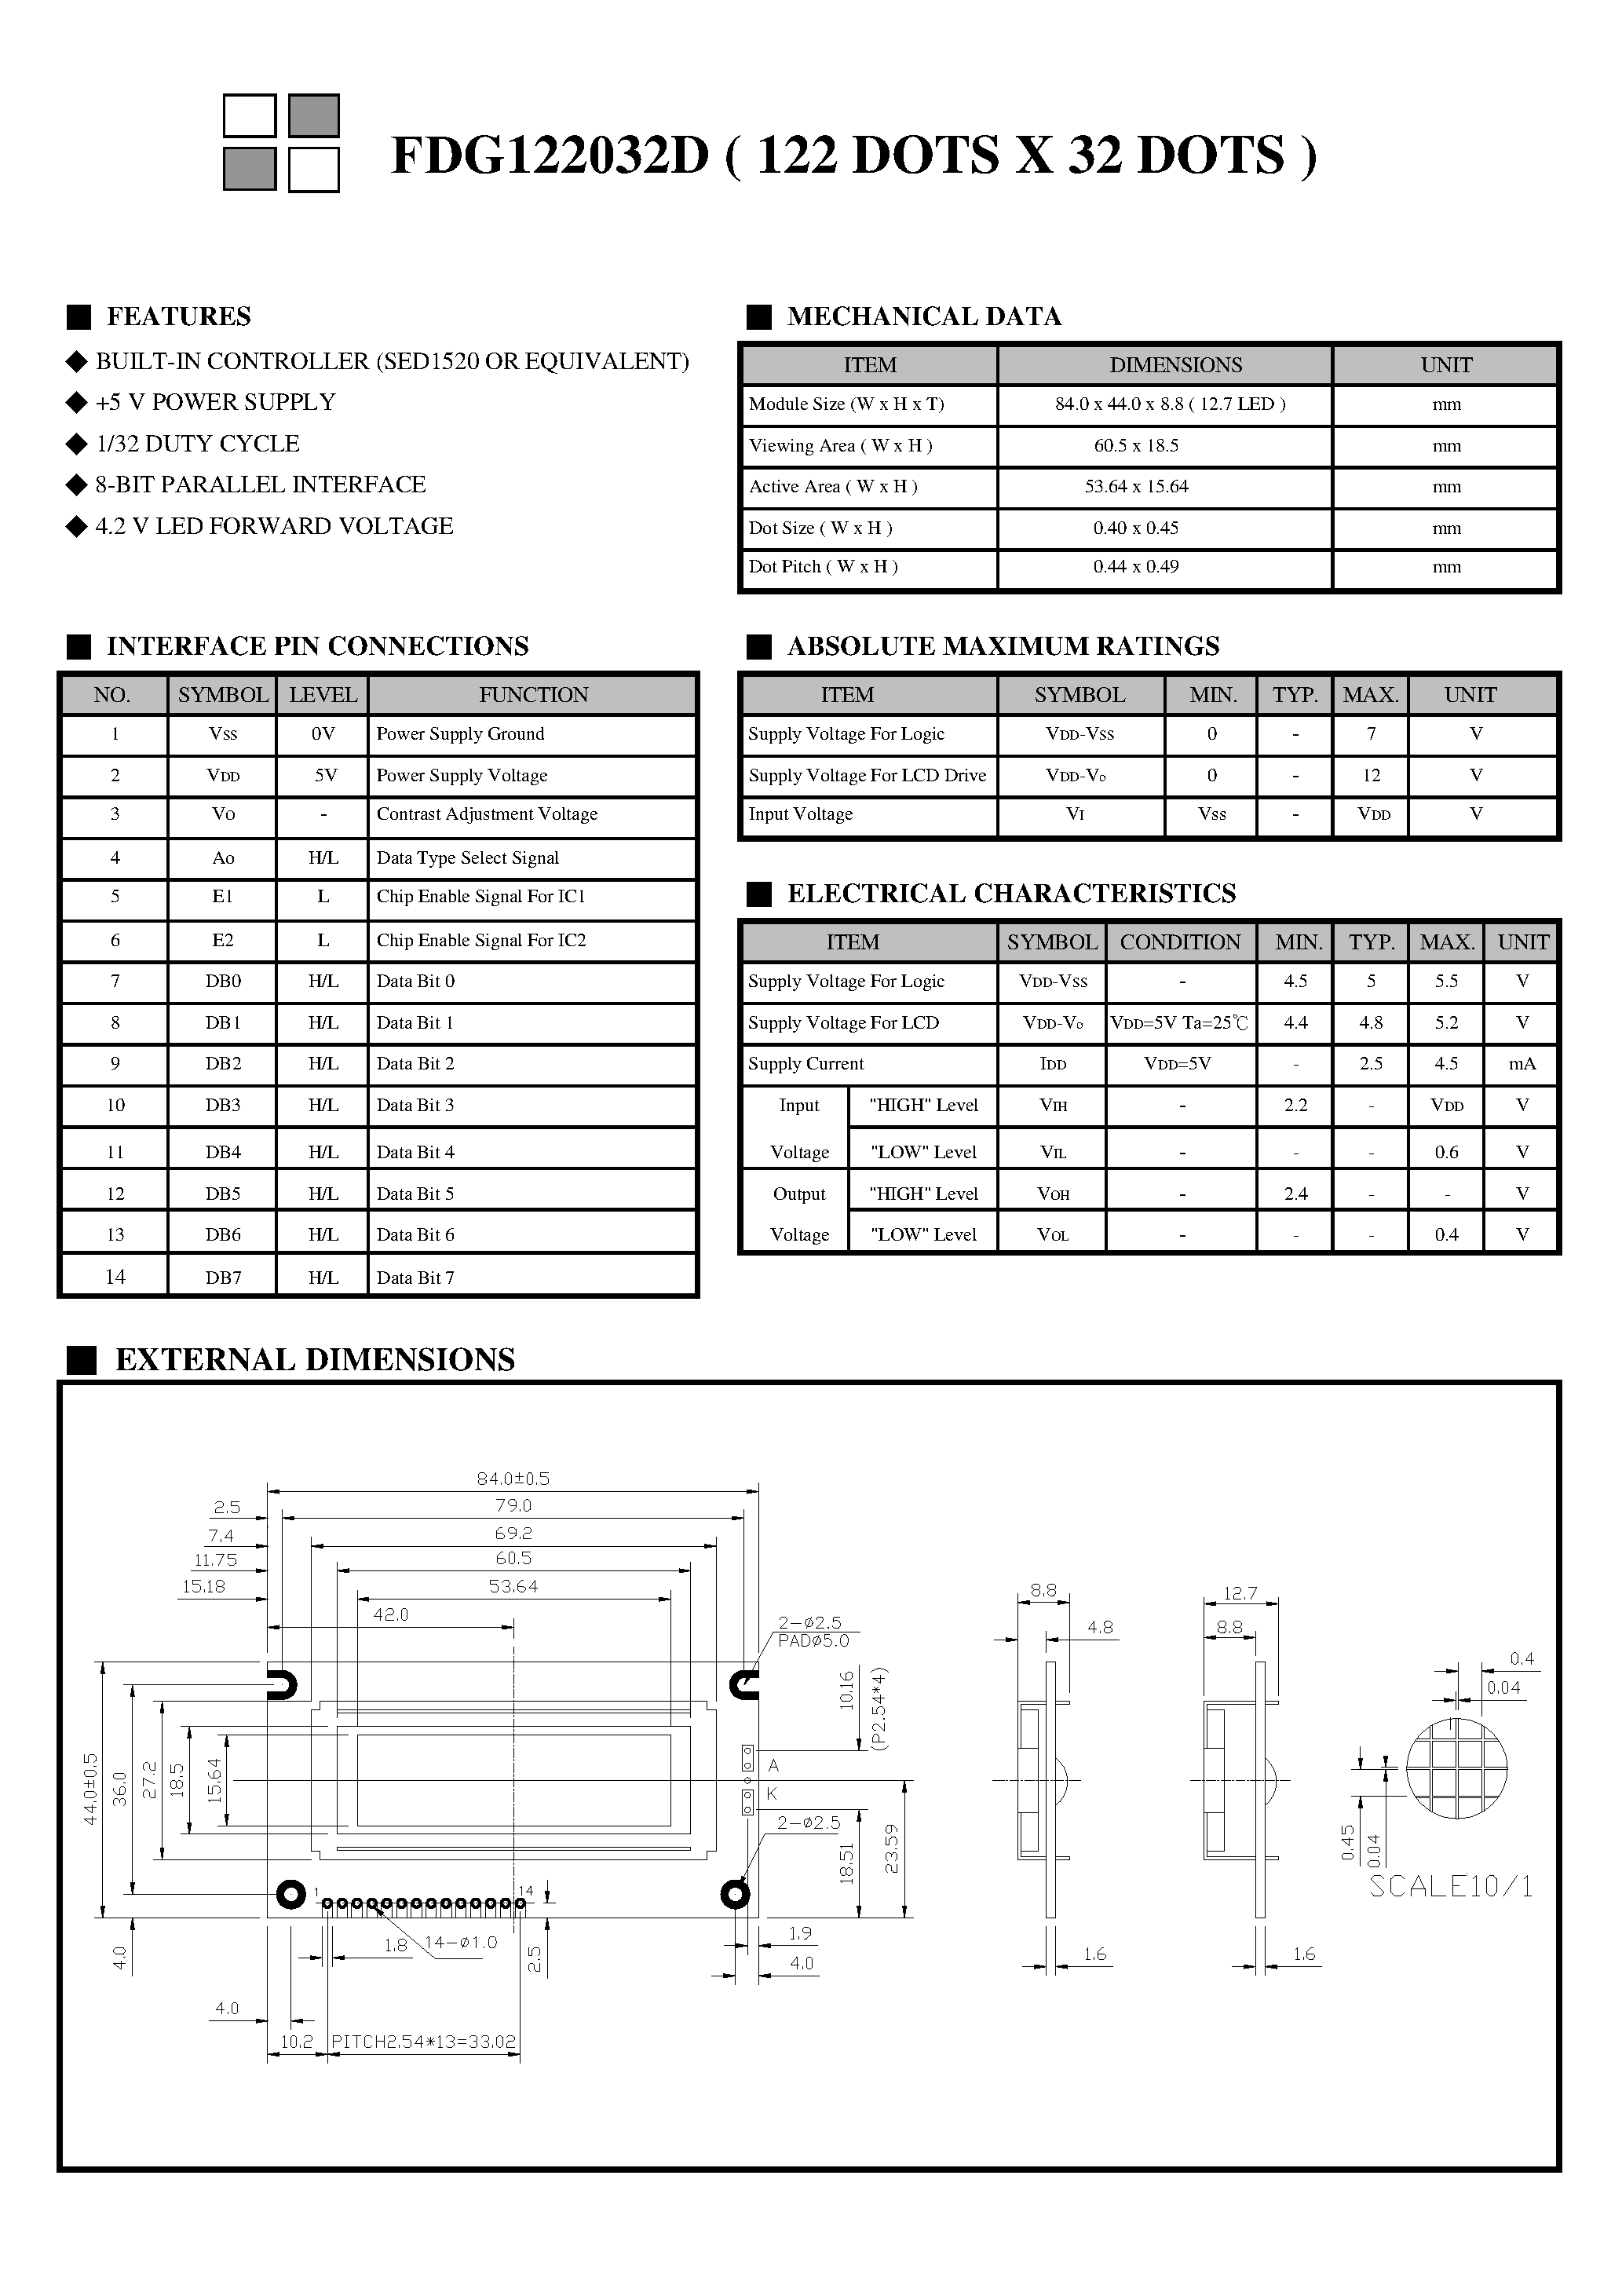 Datasheet FDG122032D - Monochrome Lcd Module page 2